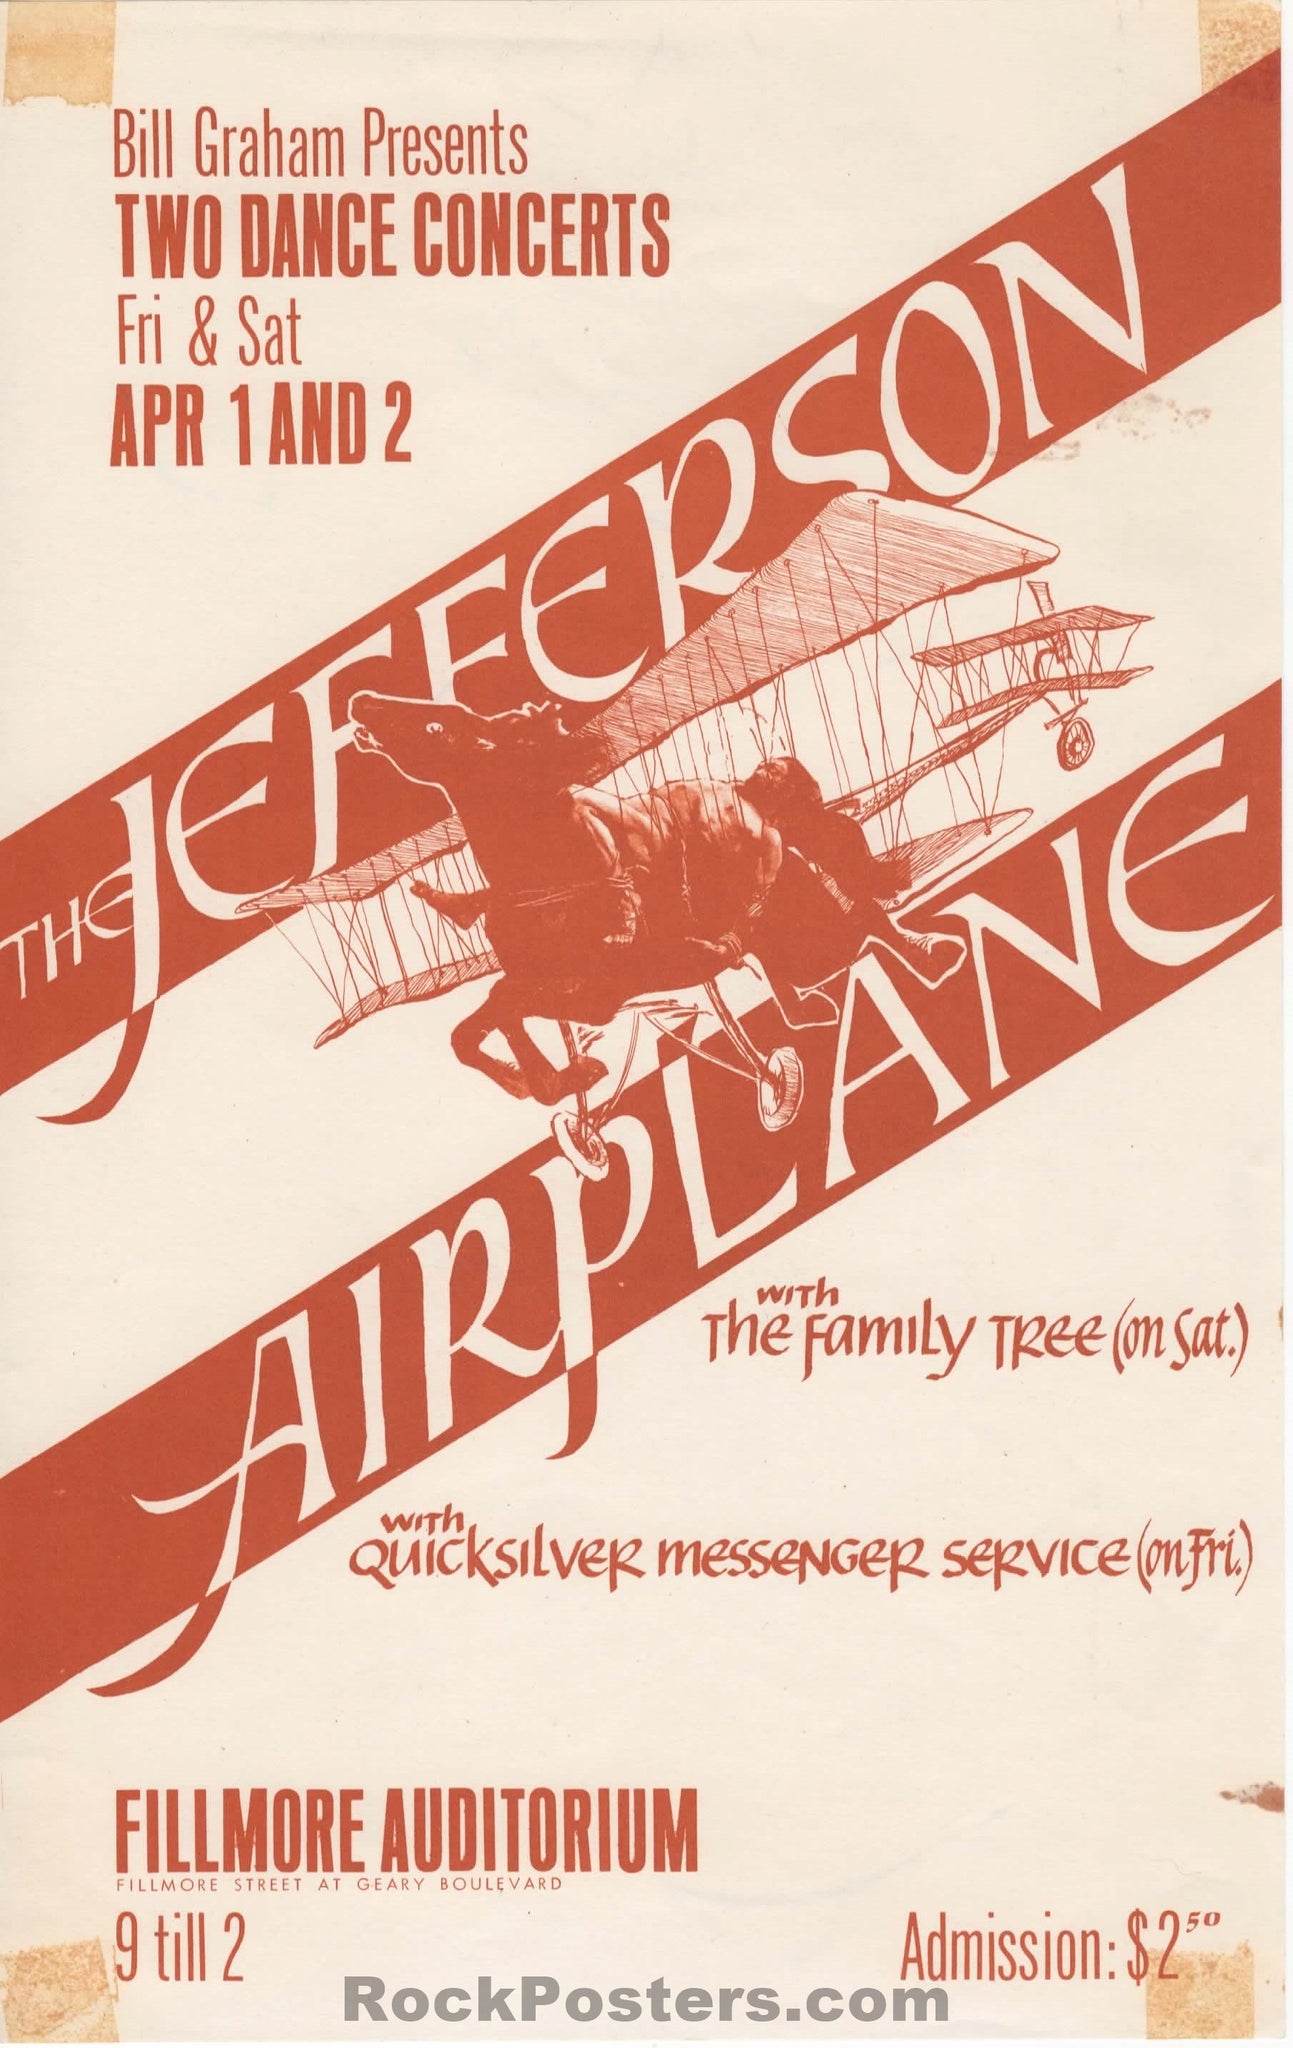 AUCTION - BG-1A - Jefferson Airplane - Quicksilver Messenger - Peter Bailey - 1966 Handbill - Fillmore Auditorium - Excellent